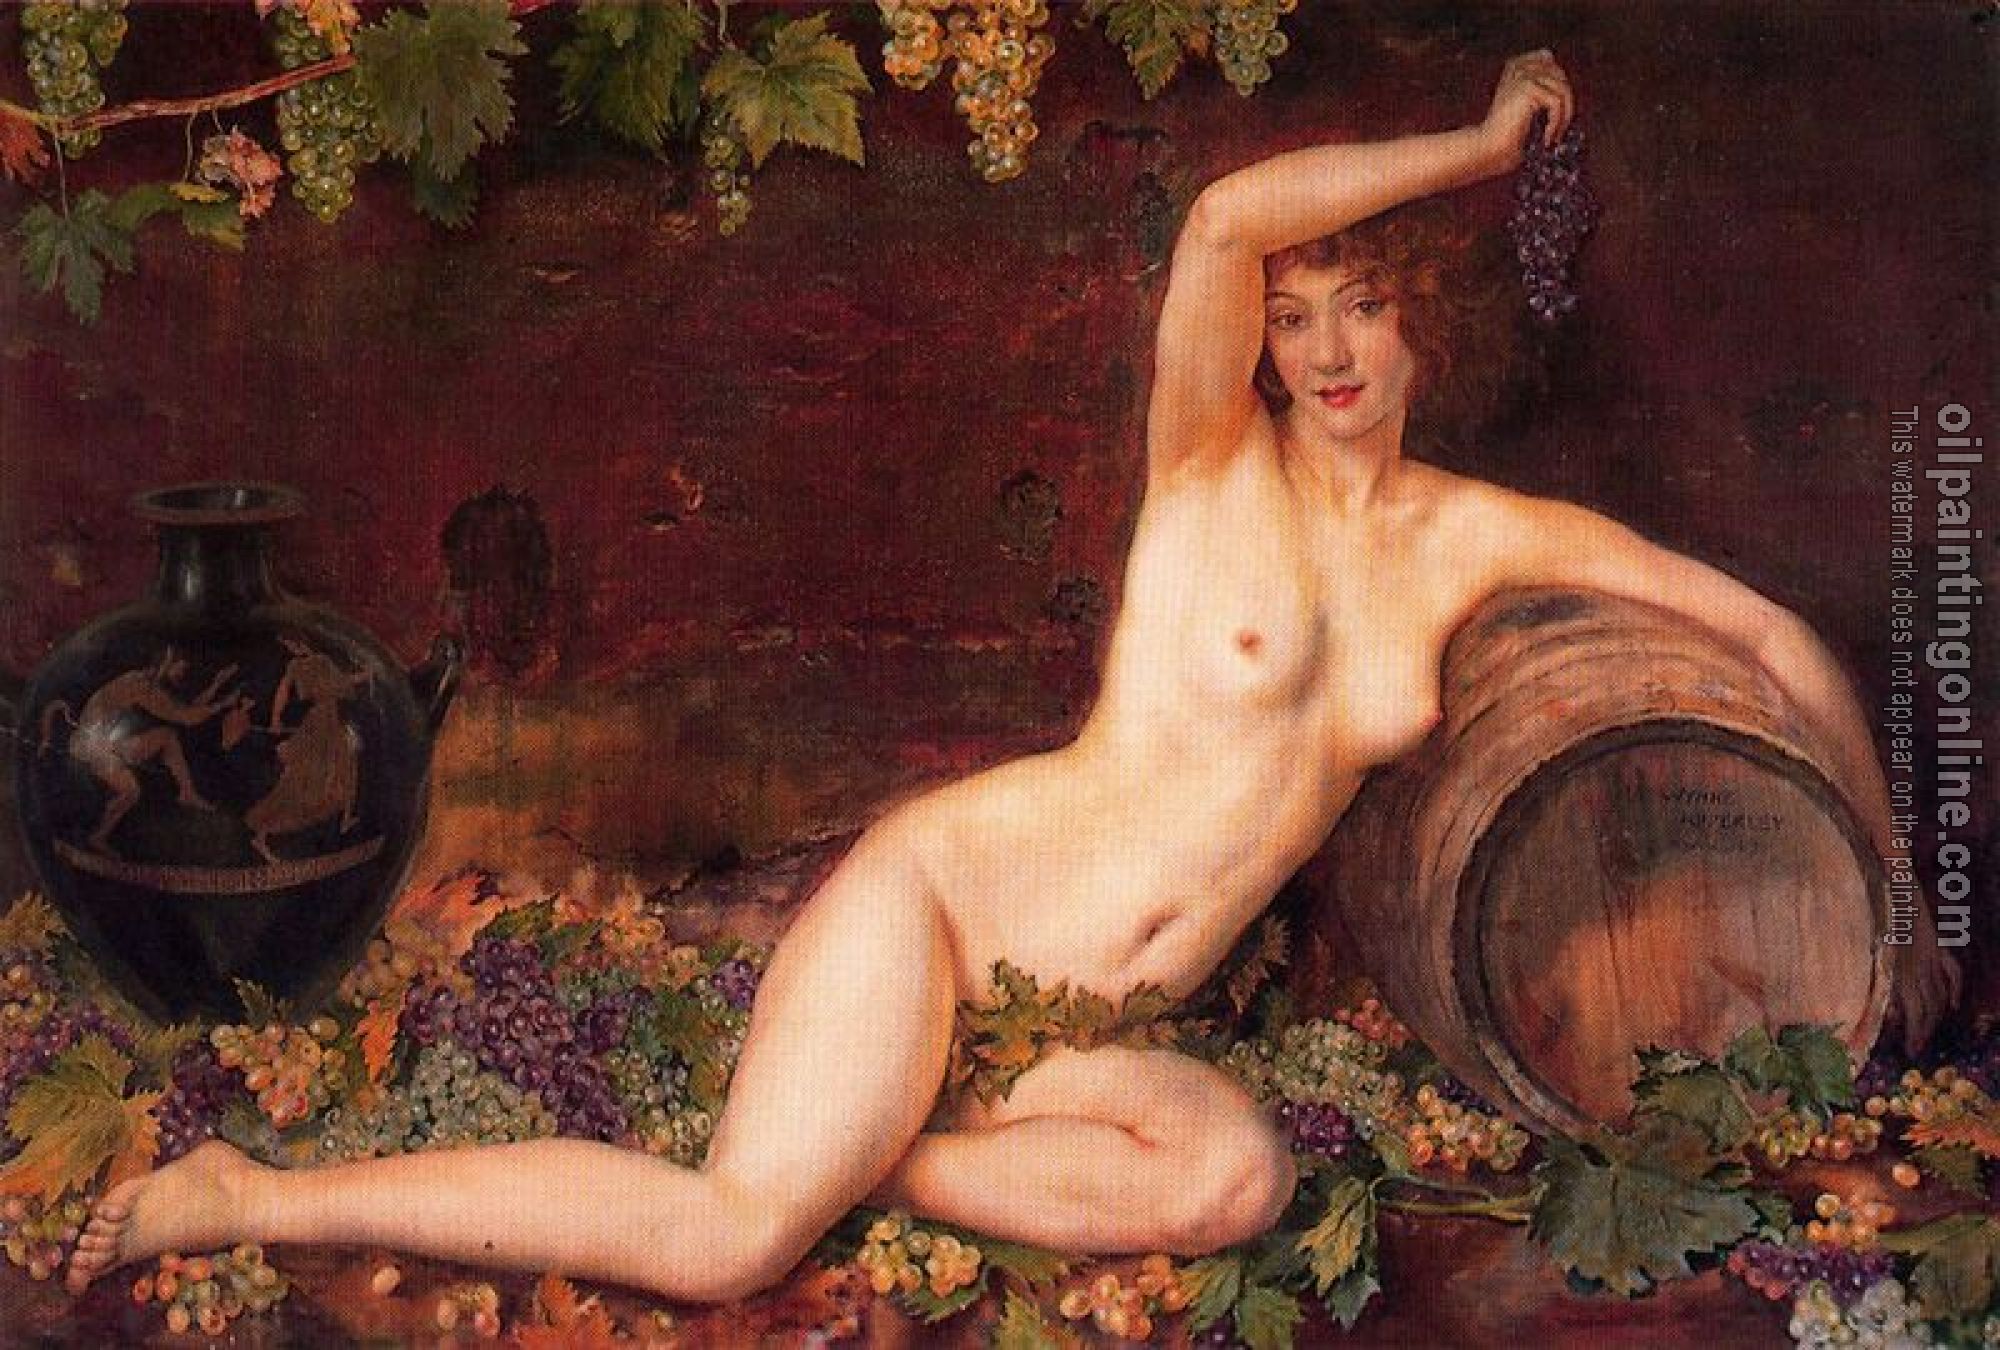 Jorge Apperley - The spirit of the vineyard